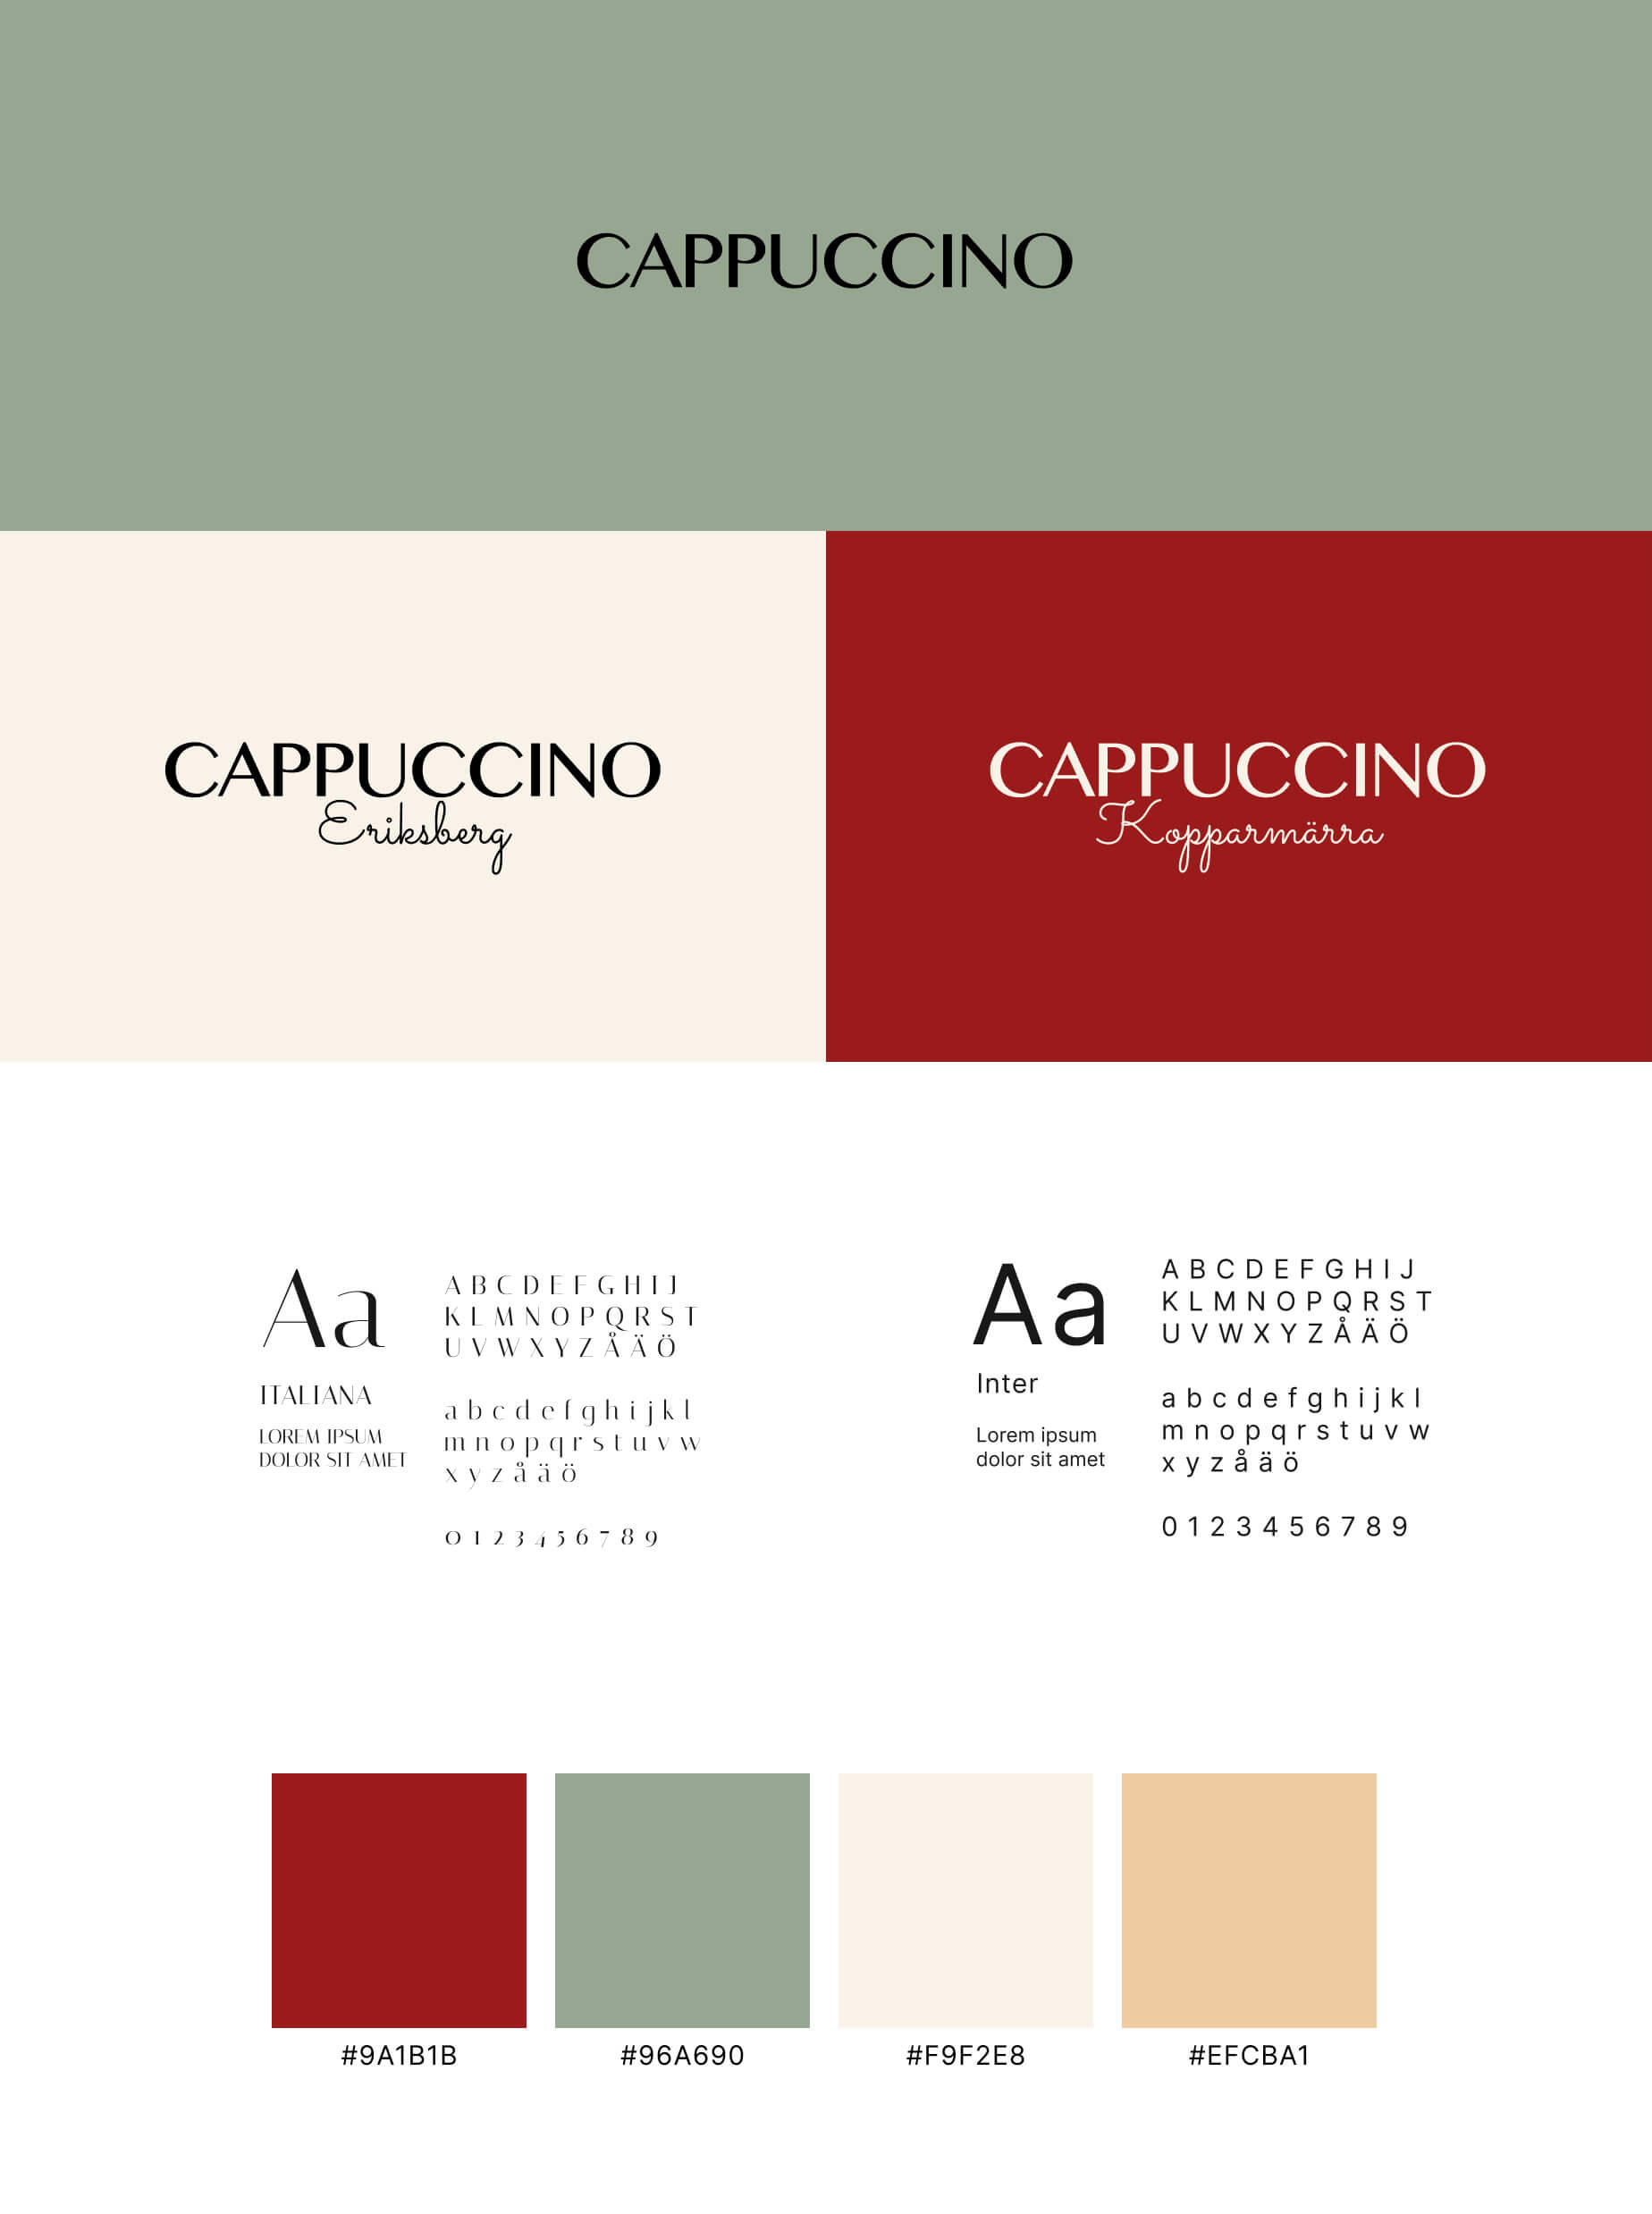 Cappuccino branding